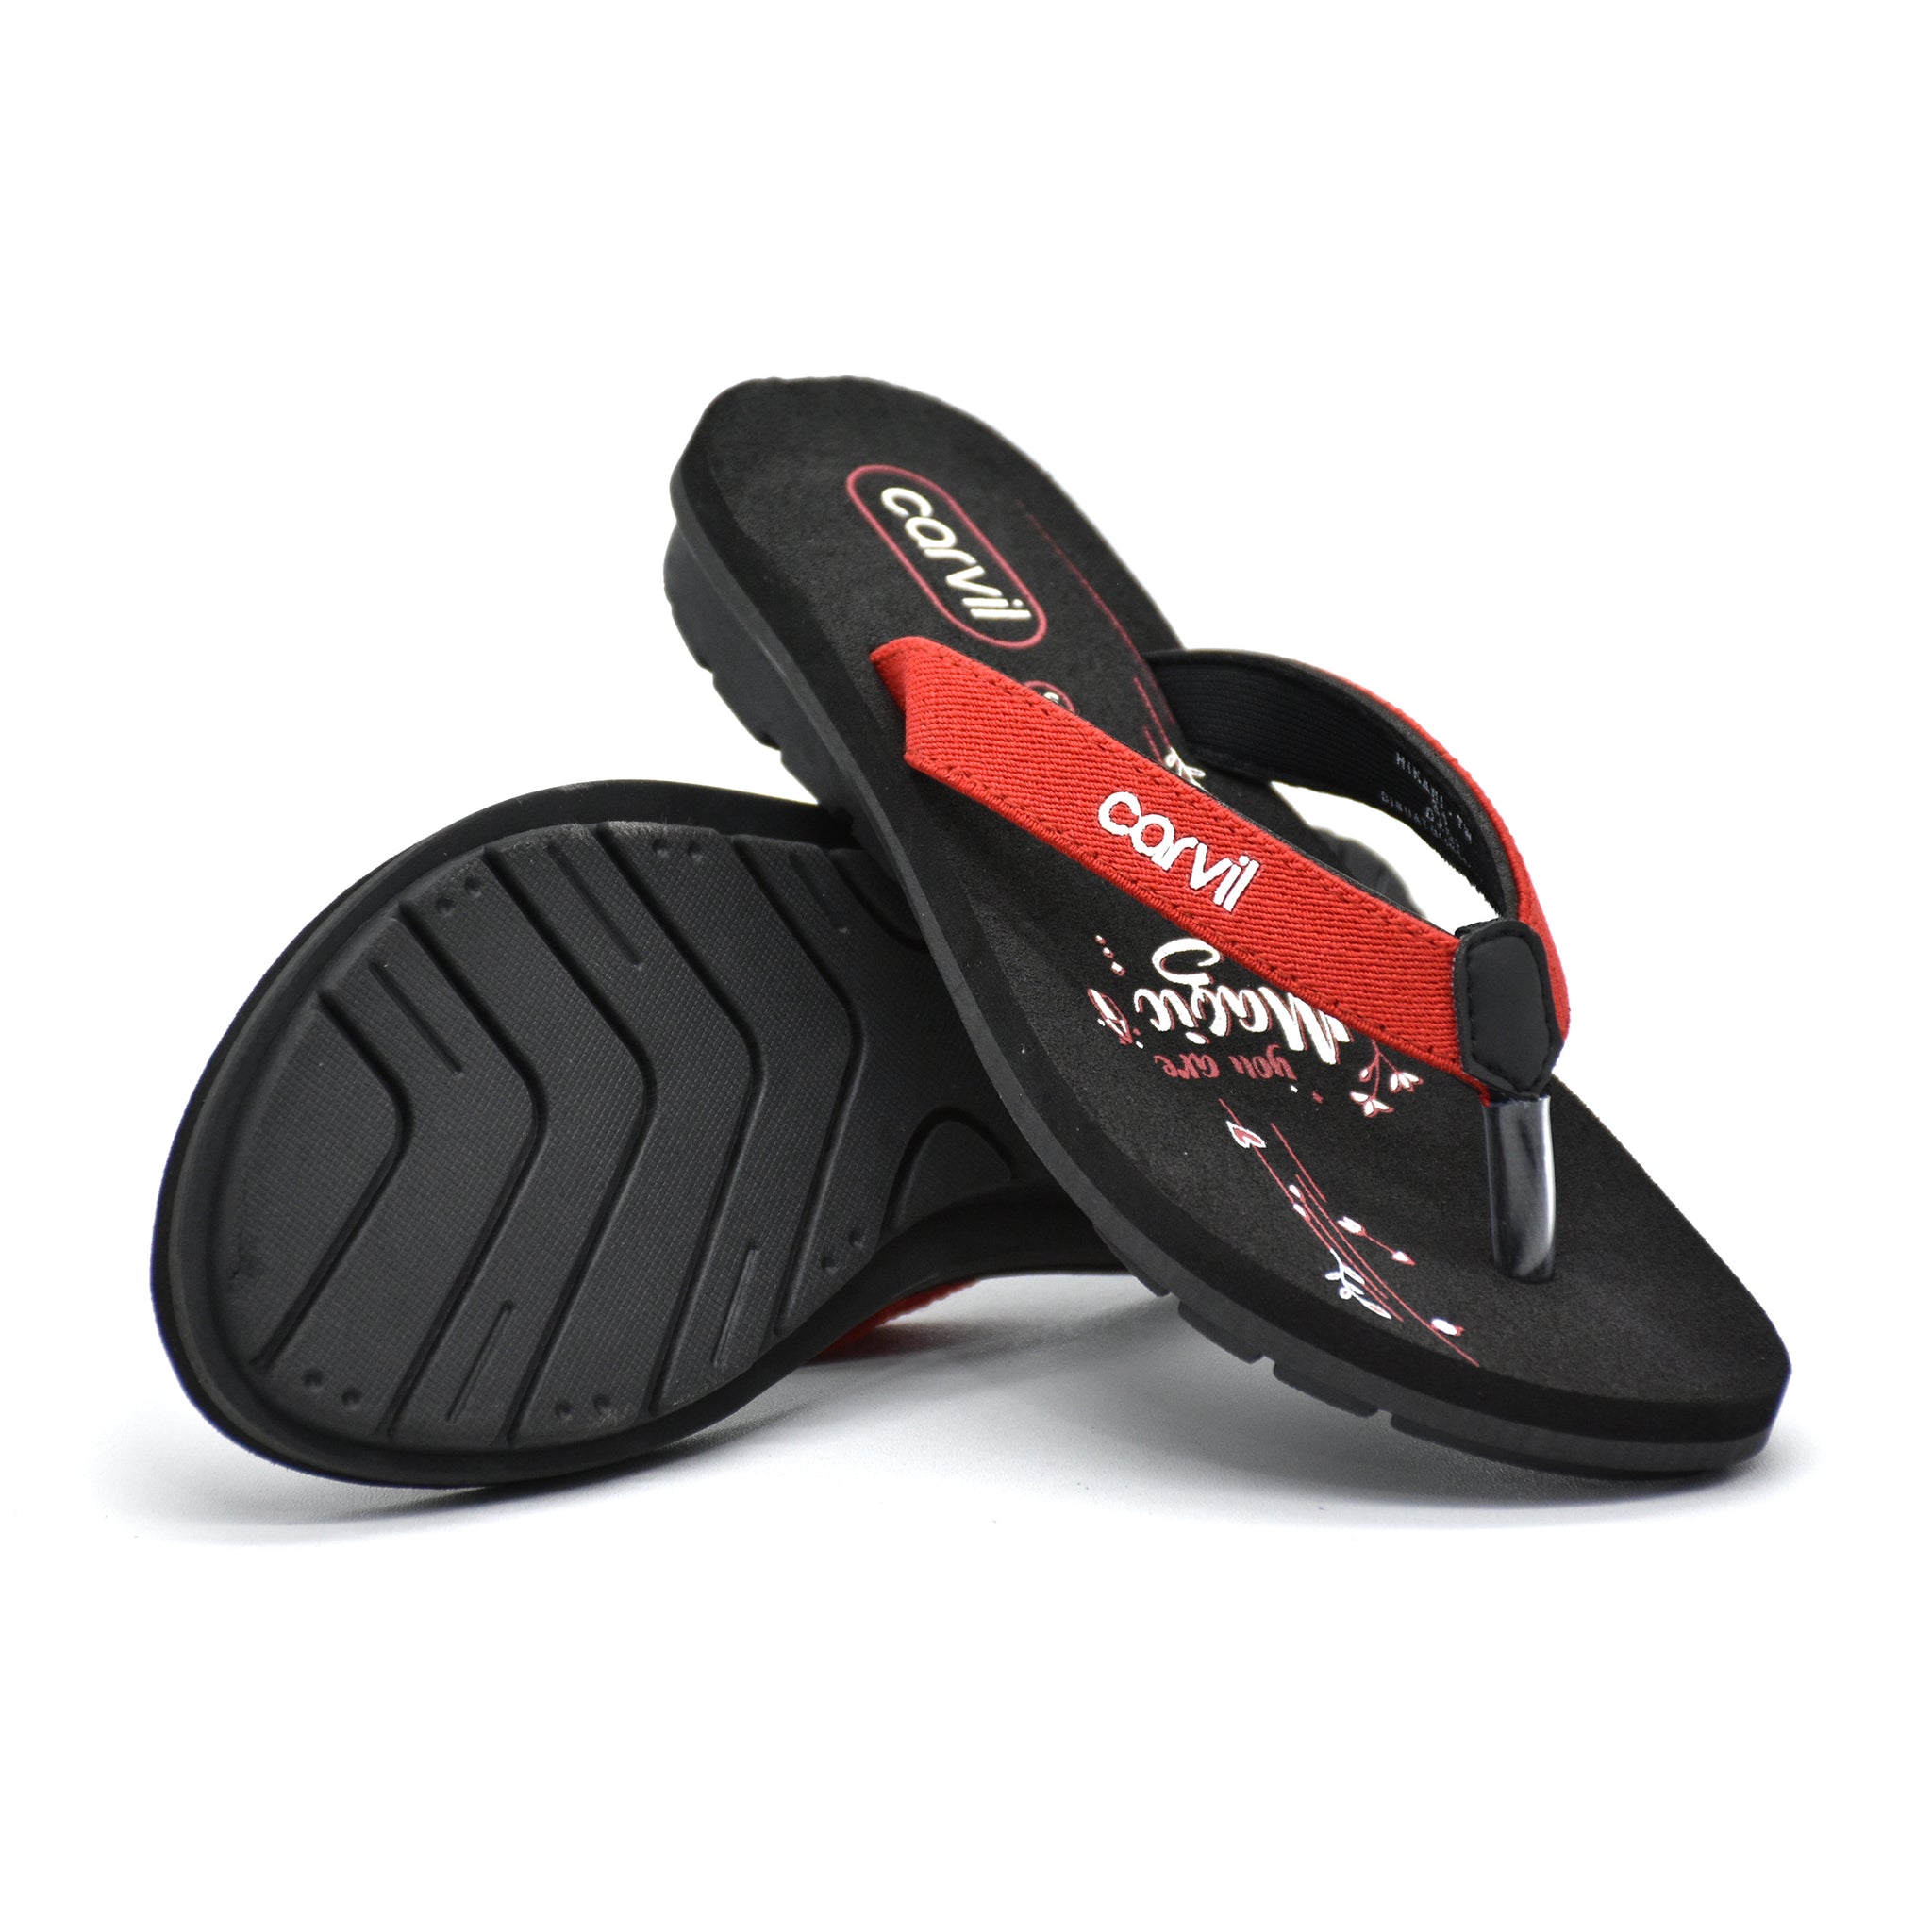 Carvil Sandal Anak HIKARI-TW - BLACK/RED